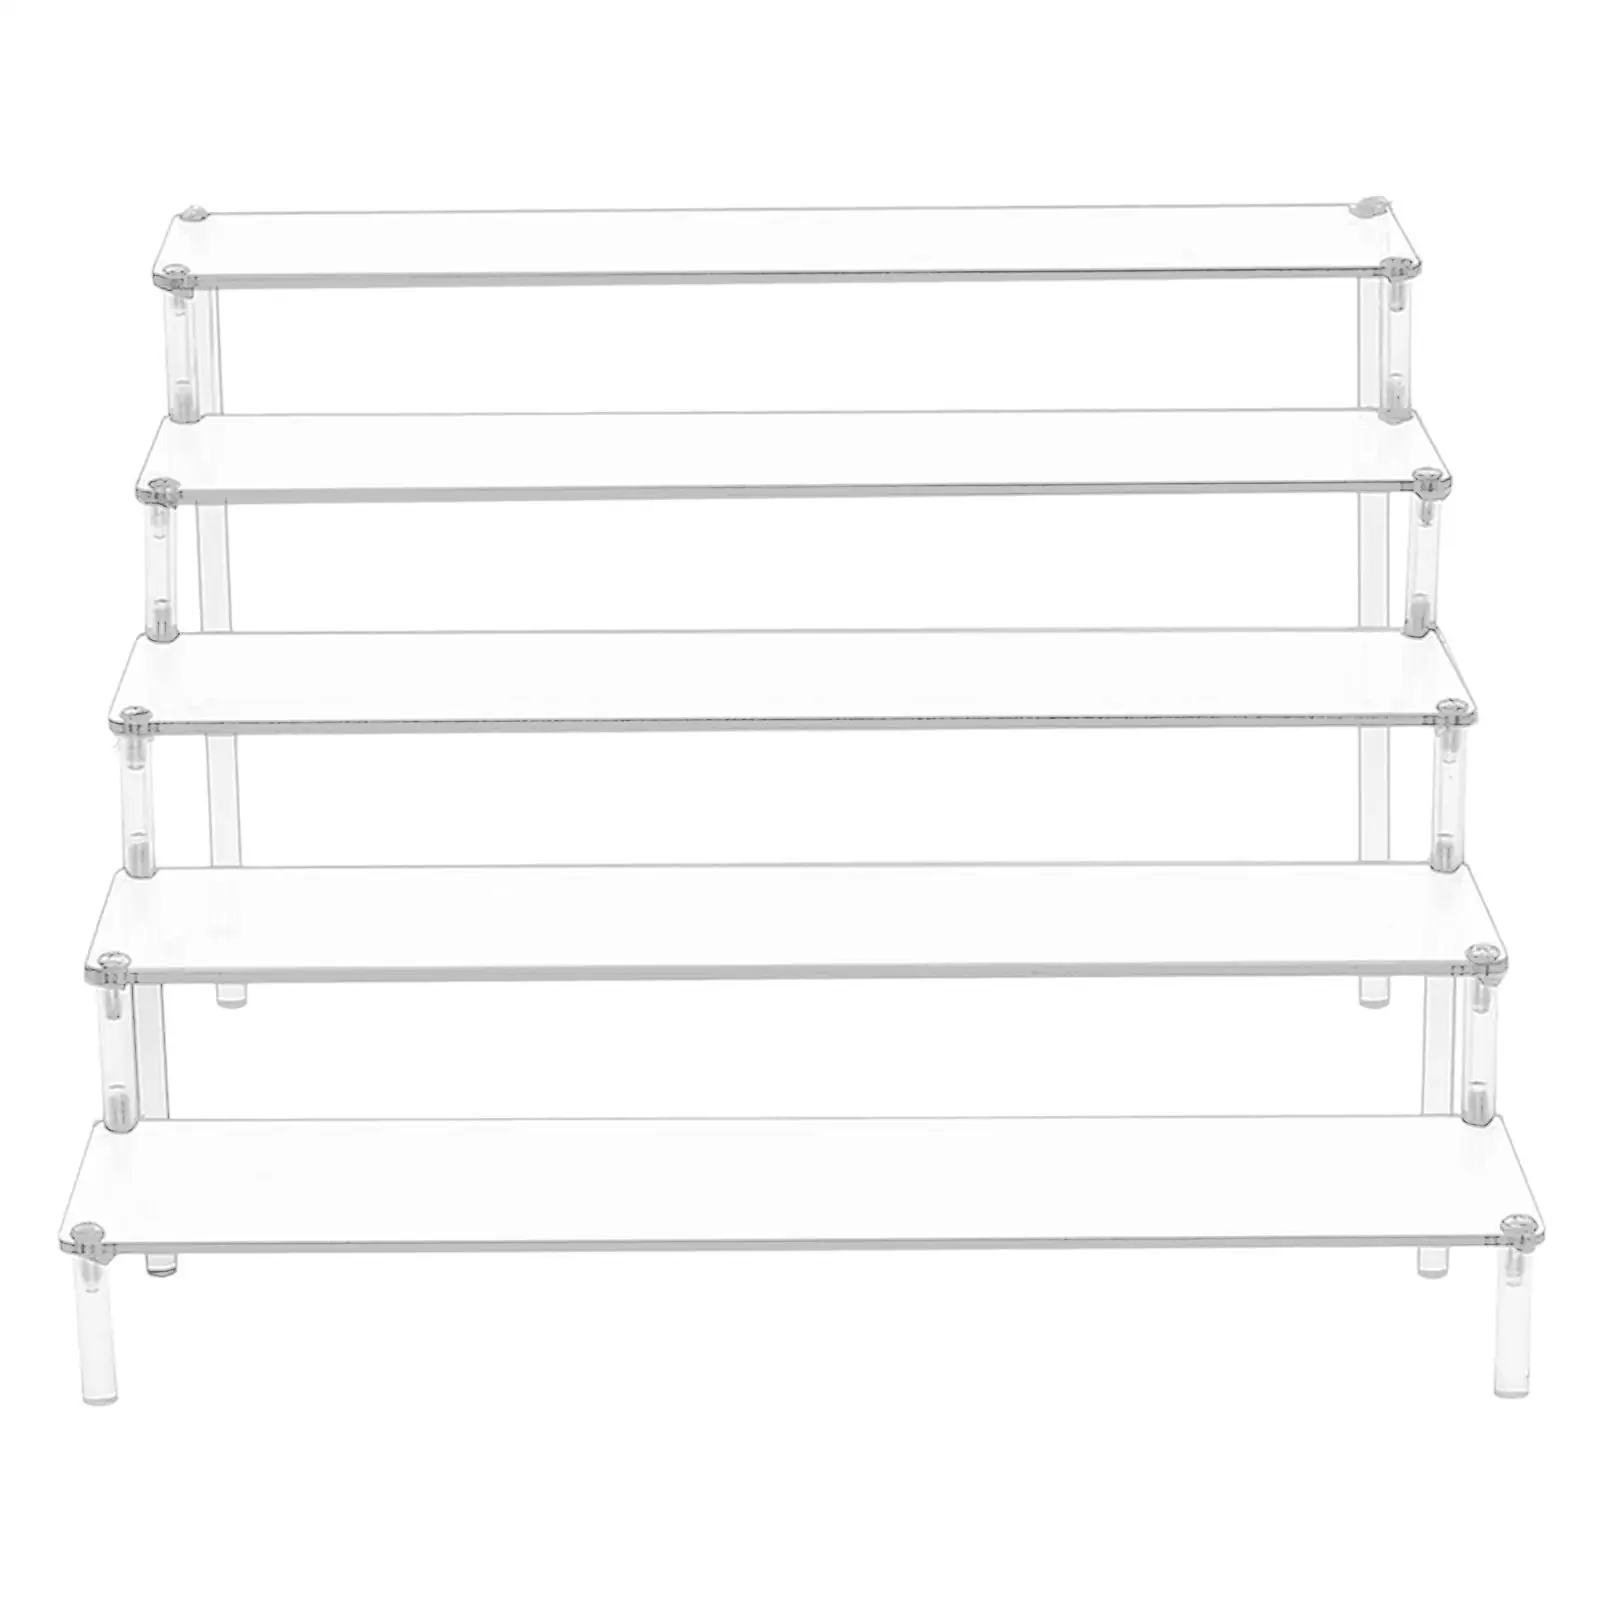 Multi-Purpose Tier Acrylic Rack Cupcakes Cosmetics Ladder Holder Countertop for Store Shop Retail Risers Shelf Showcase